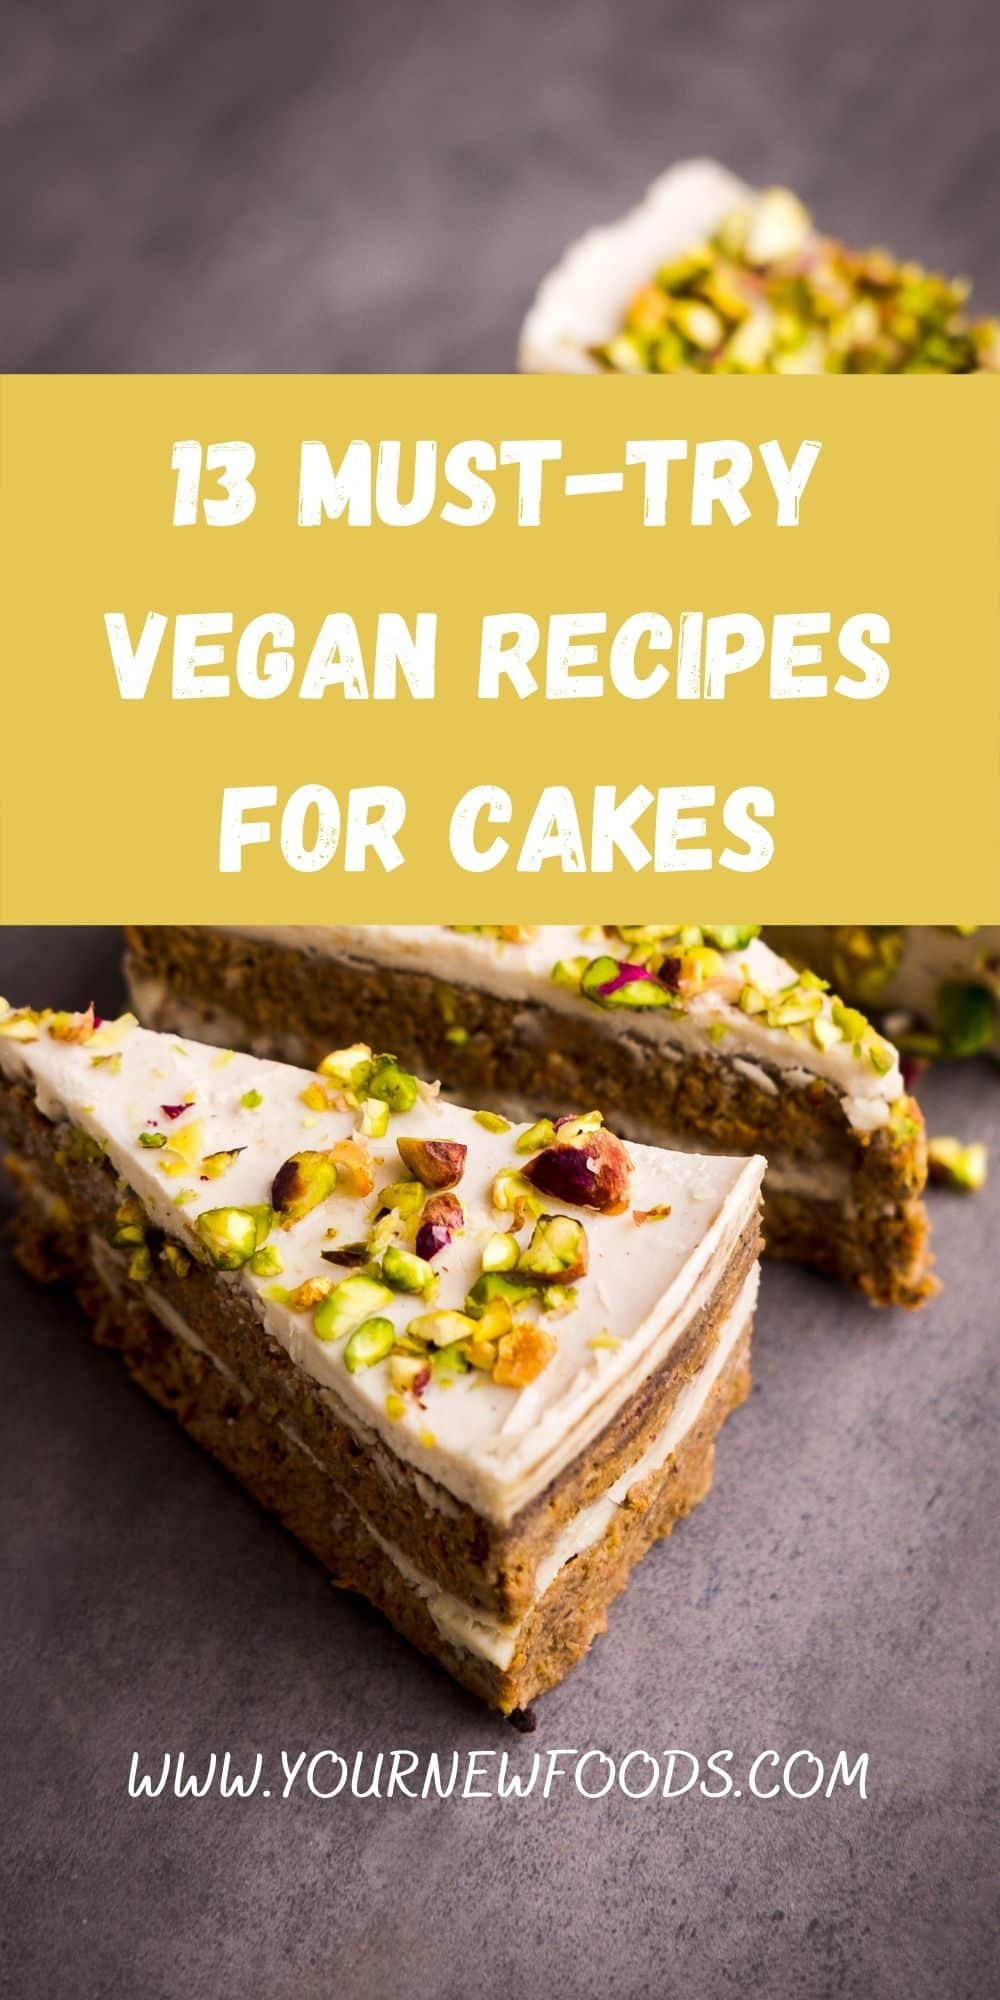 Vegan recipes for Cakes